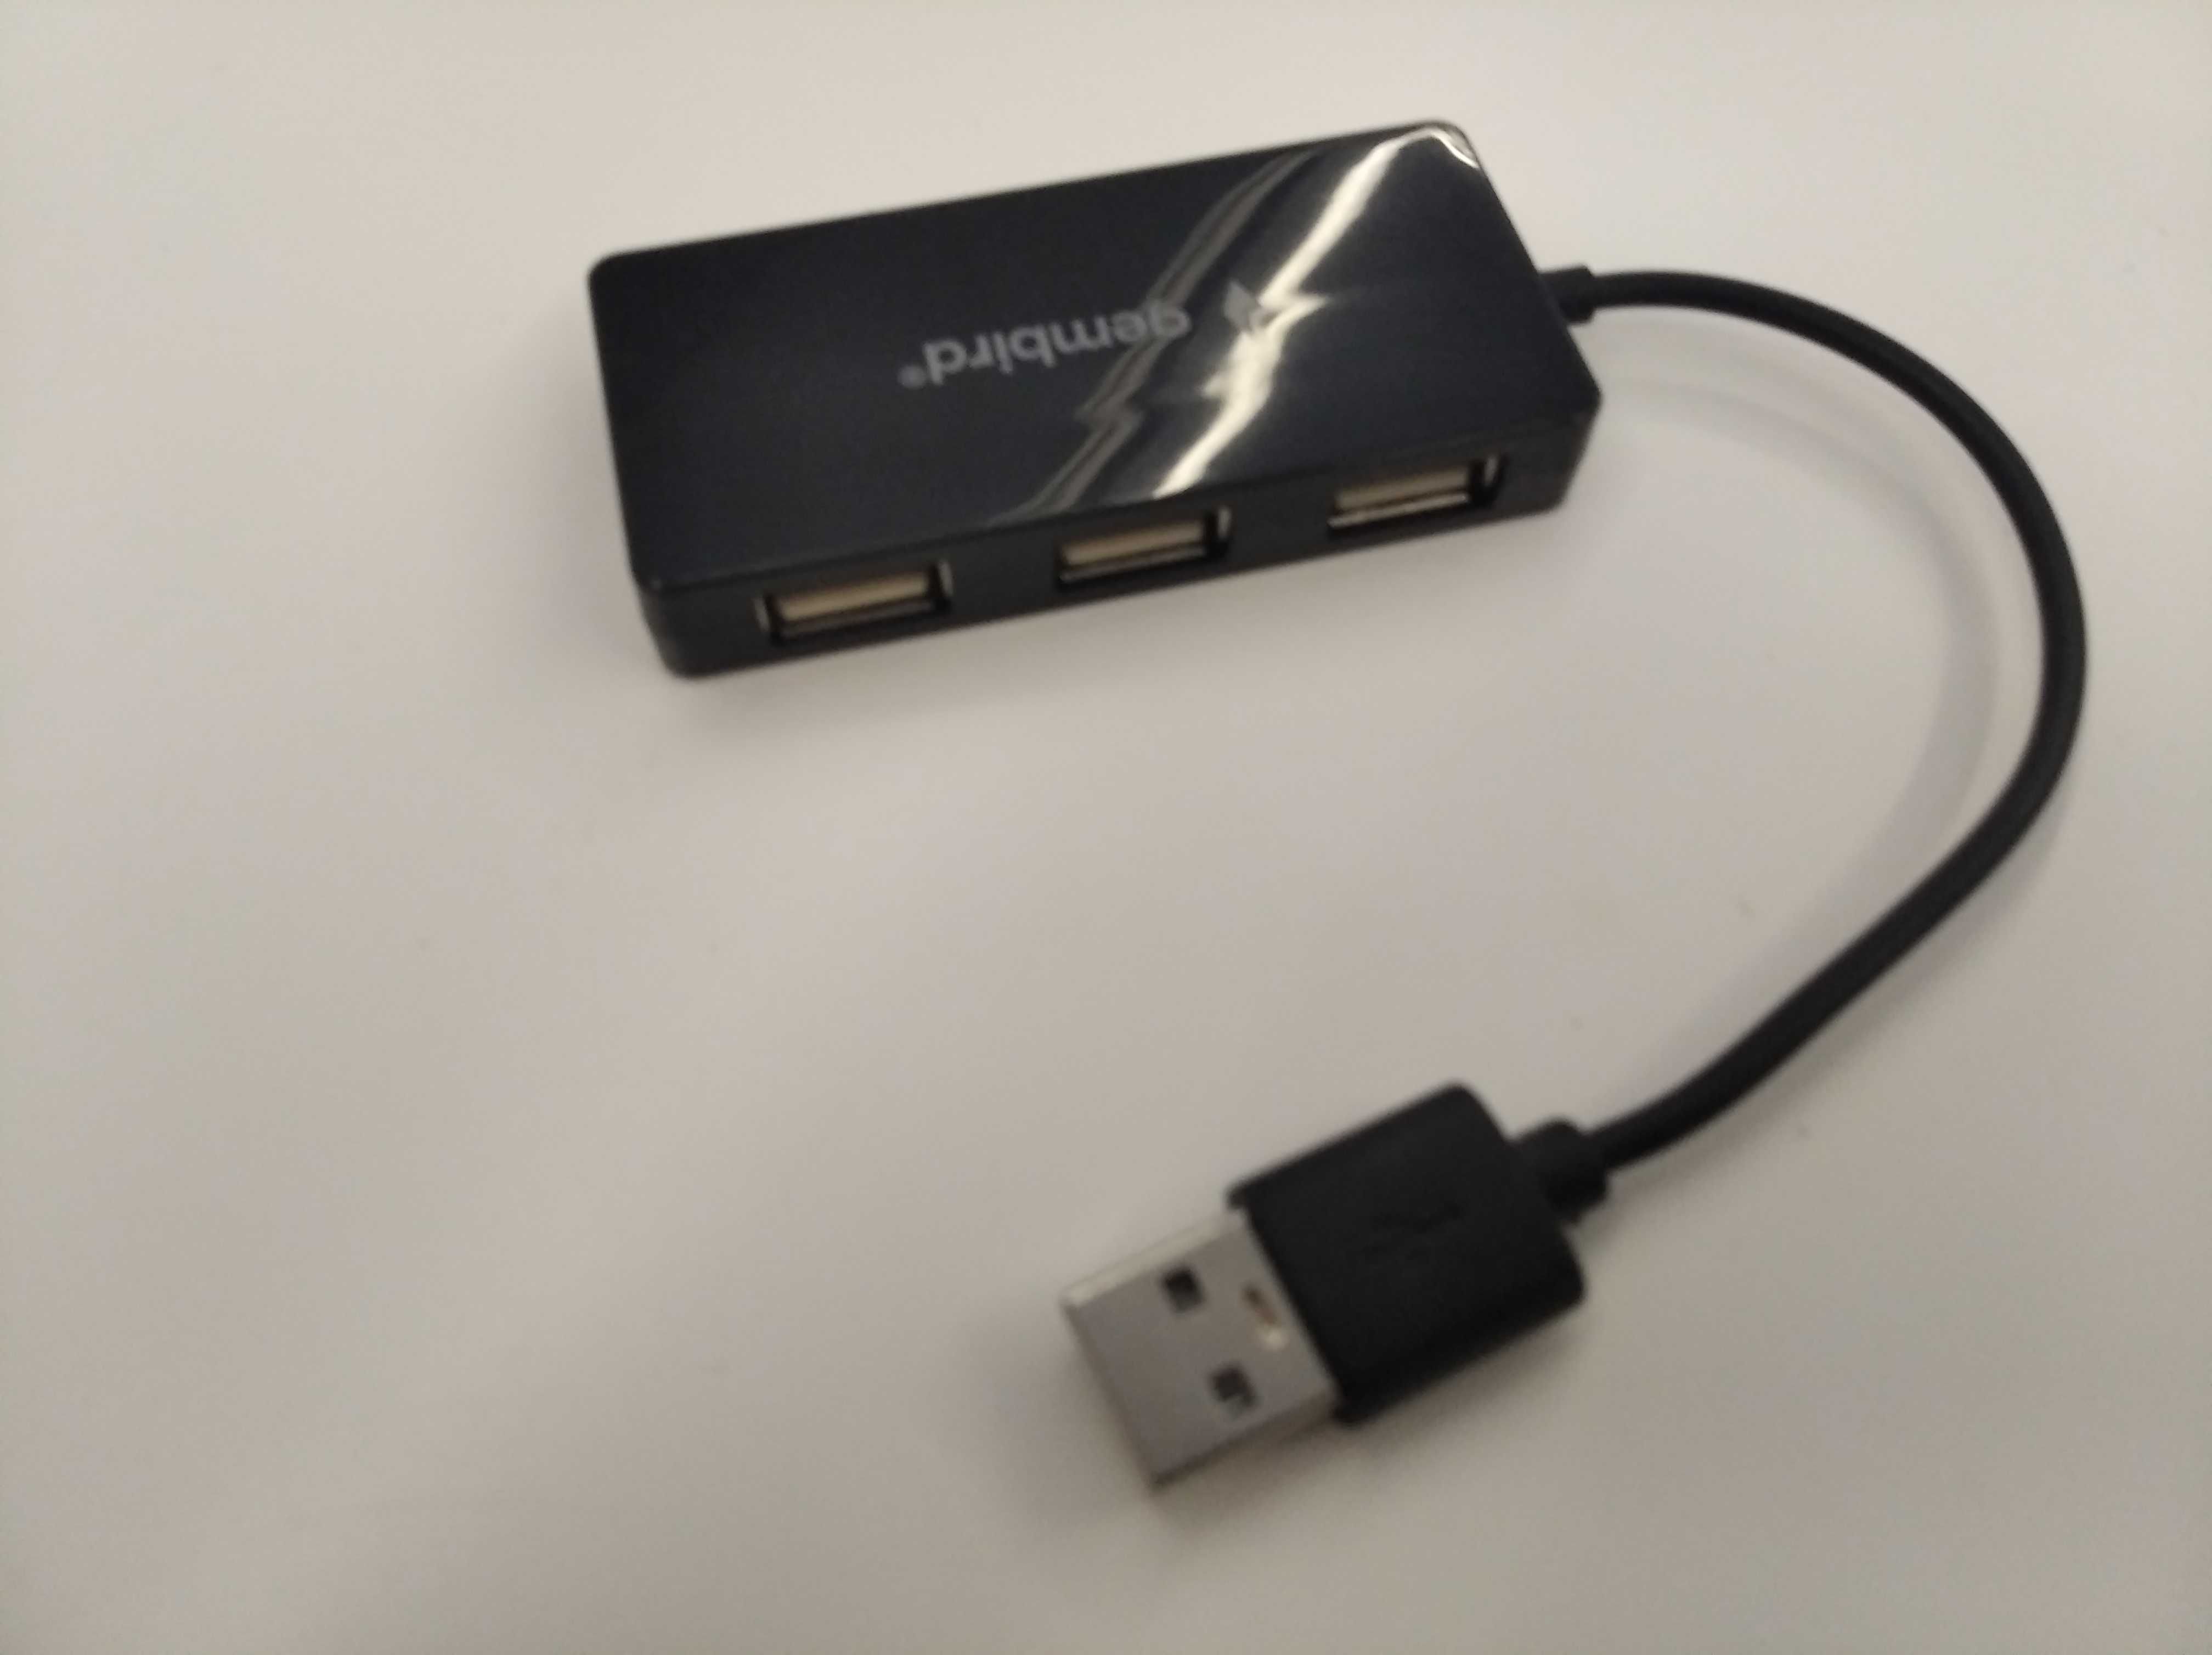 USB-хаб Gembird 4 порта USB 2.0 (UHB-U2P4-04)